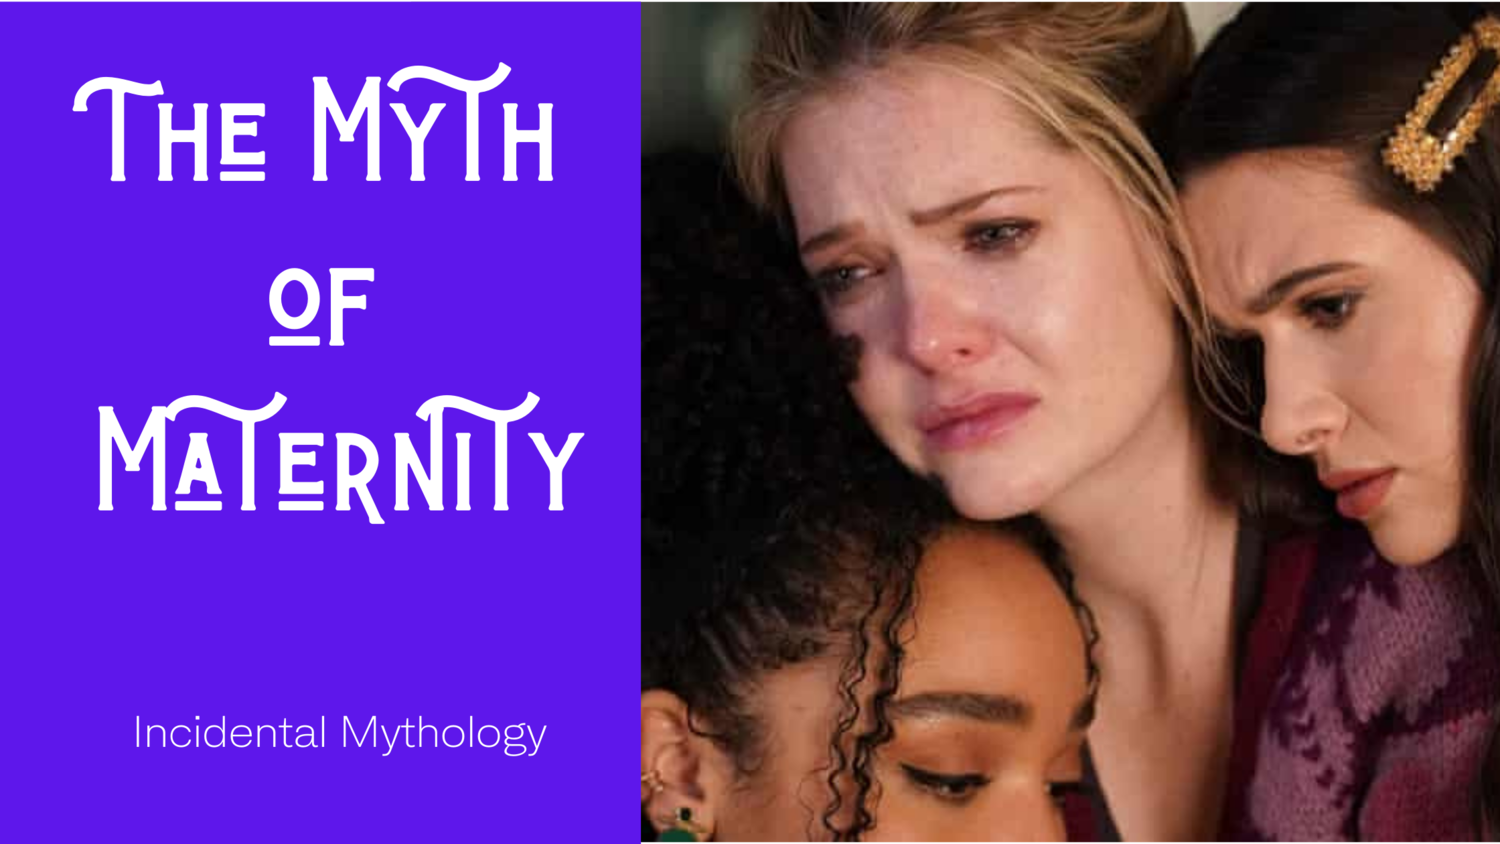 The Myth of Maternity